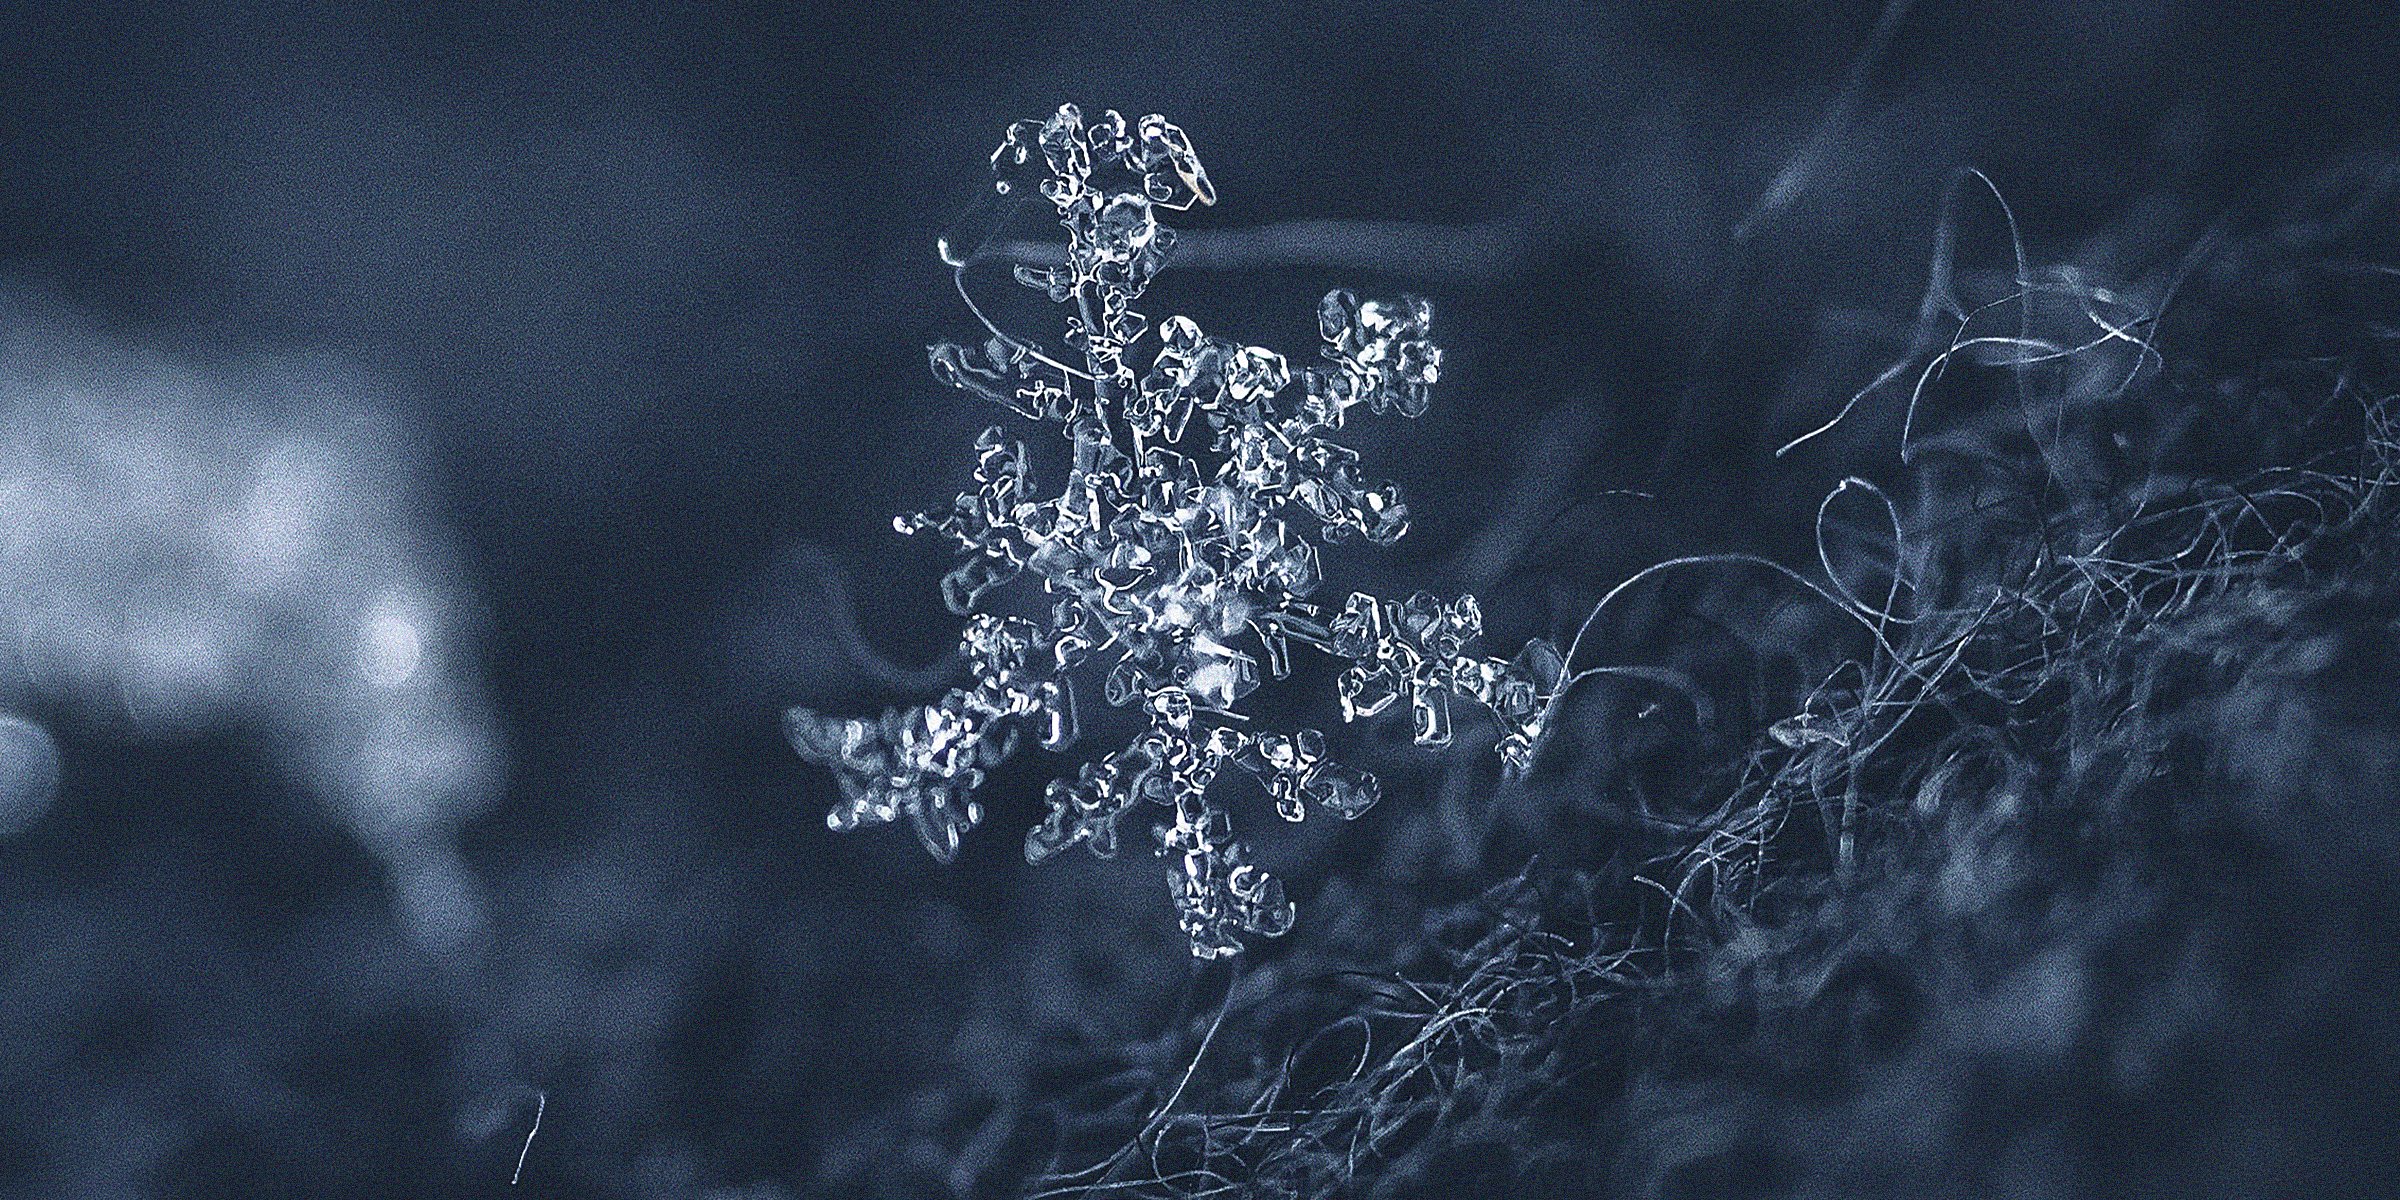 A snowflake | Image: AmoDays